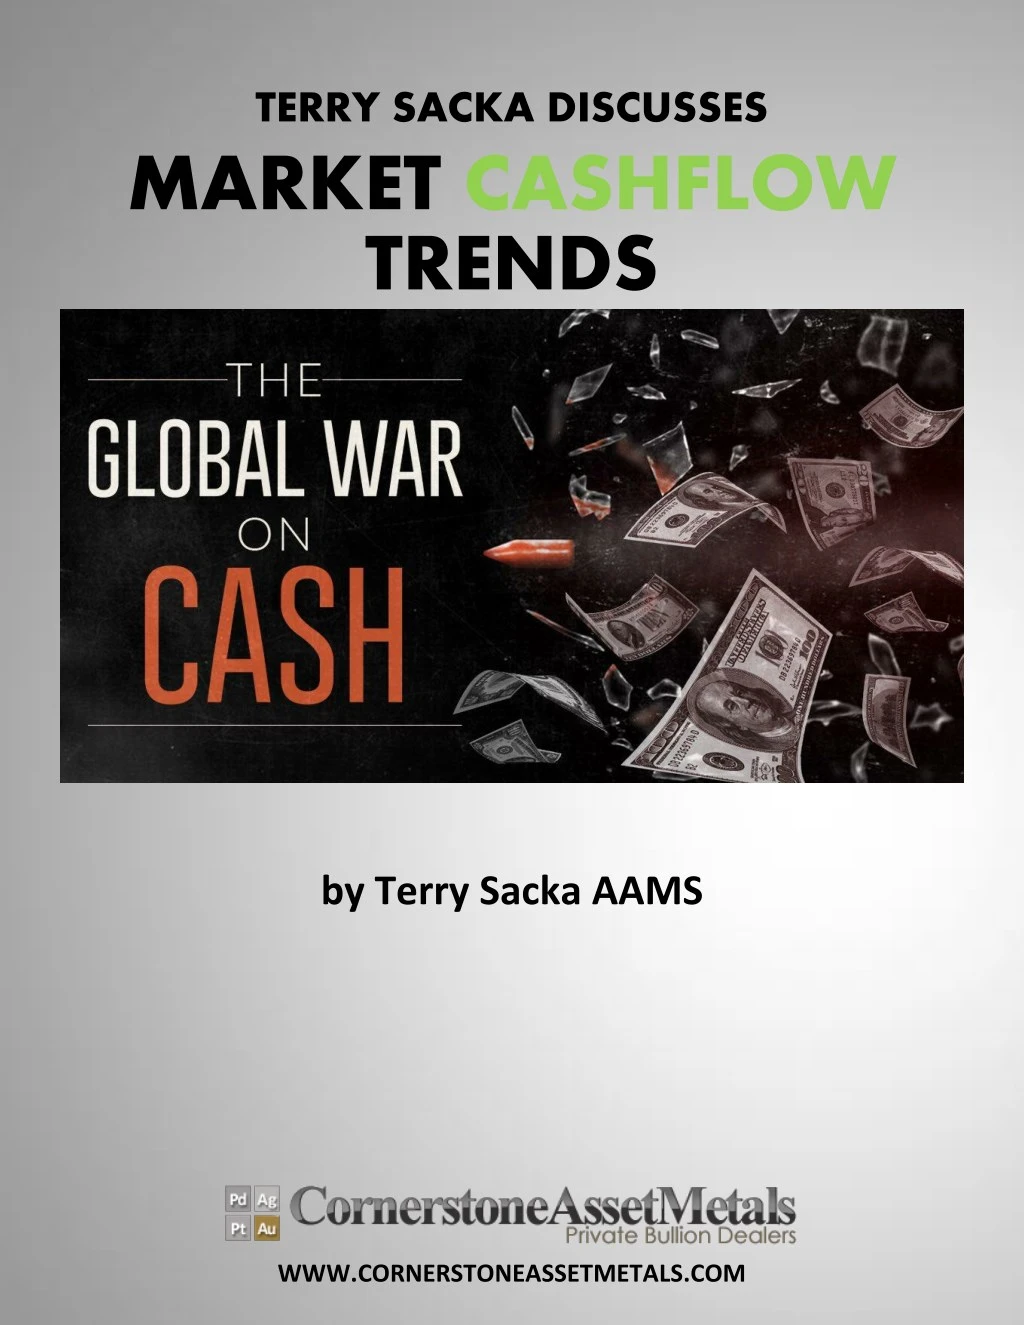 terry sacka discusses market cashflow trends